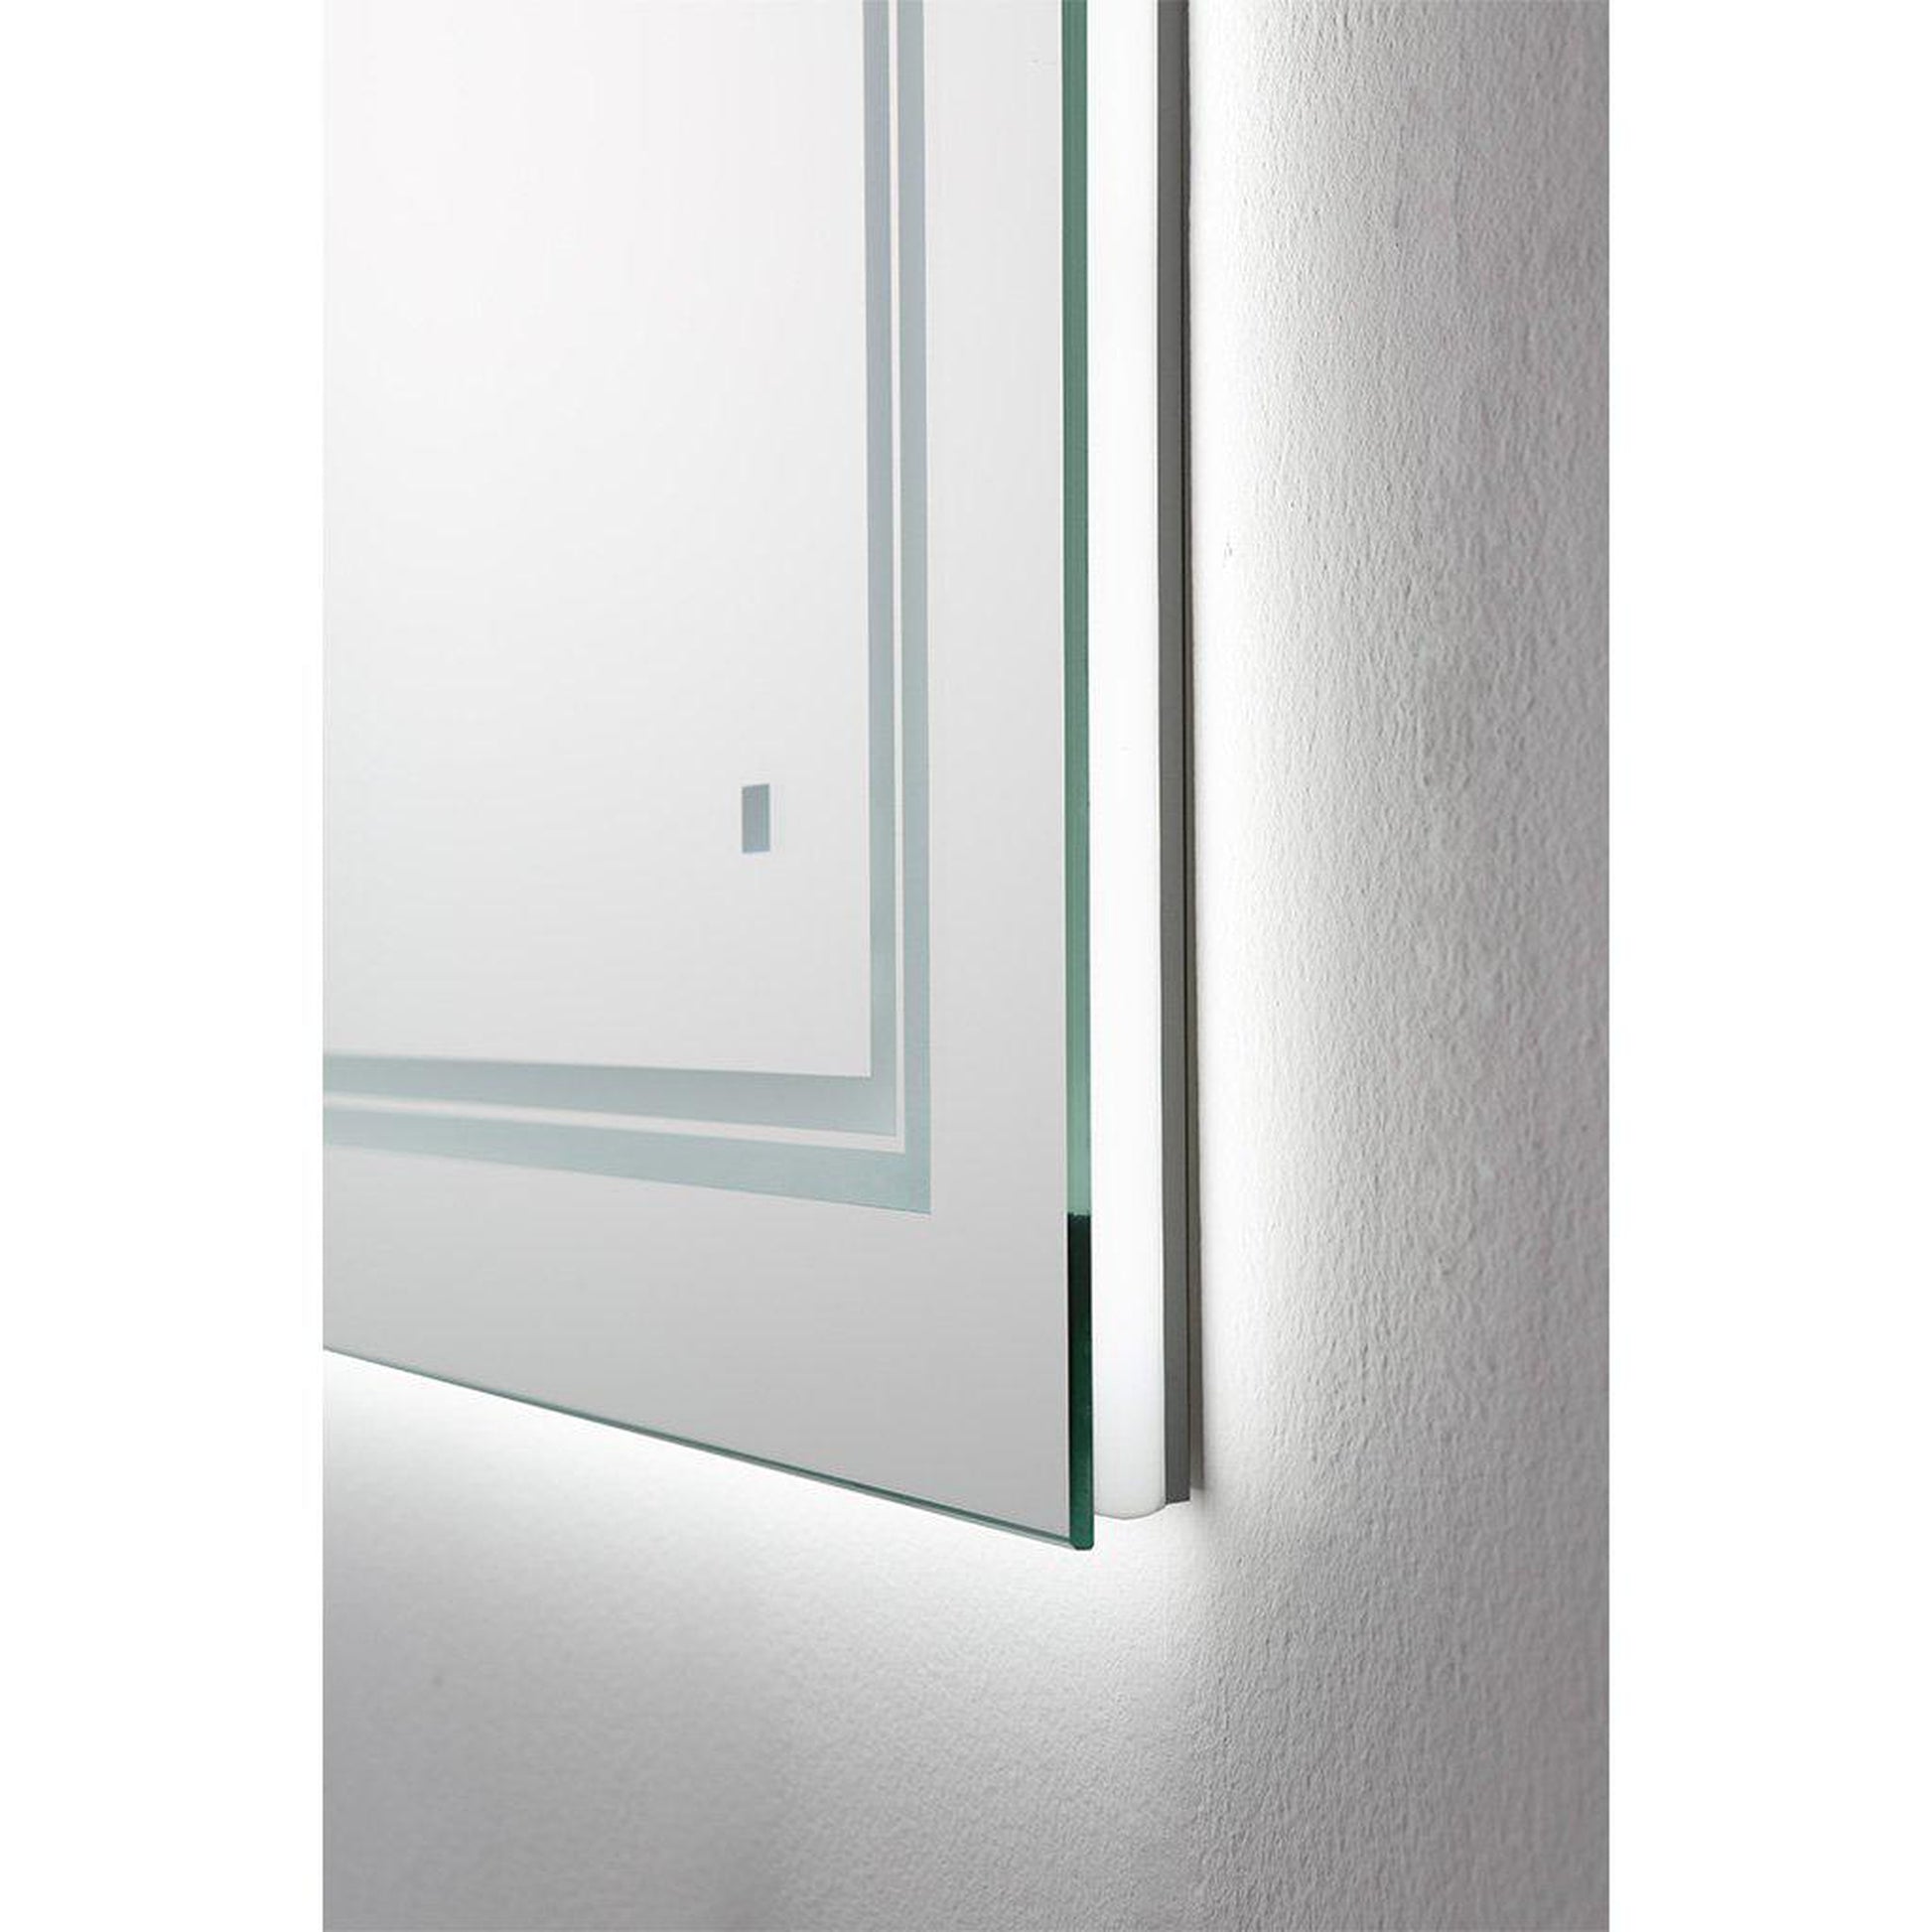 Aquadom SOHO 24" X 36" Rectangular Ultra-Slim Frame LED Lighted Bathroom Mirror With Defogger